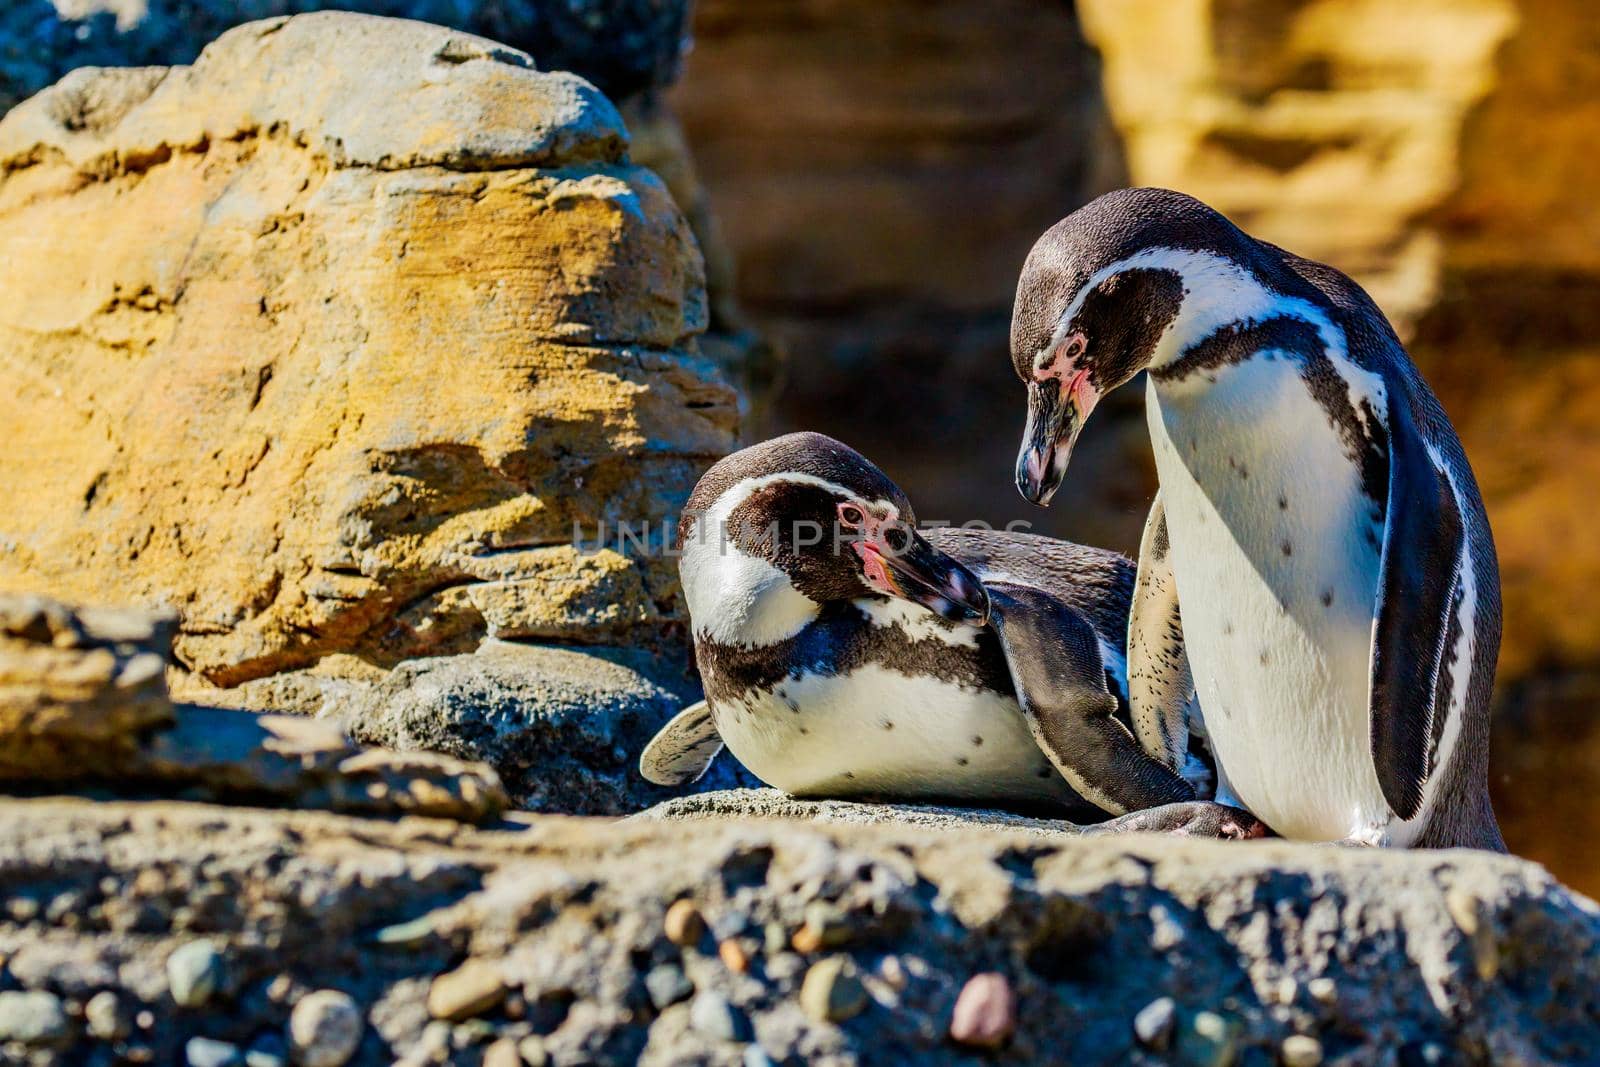 Humboldt Penguins by gepeng